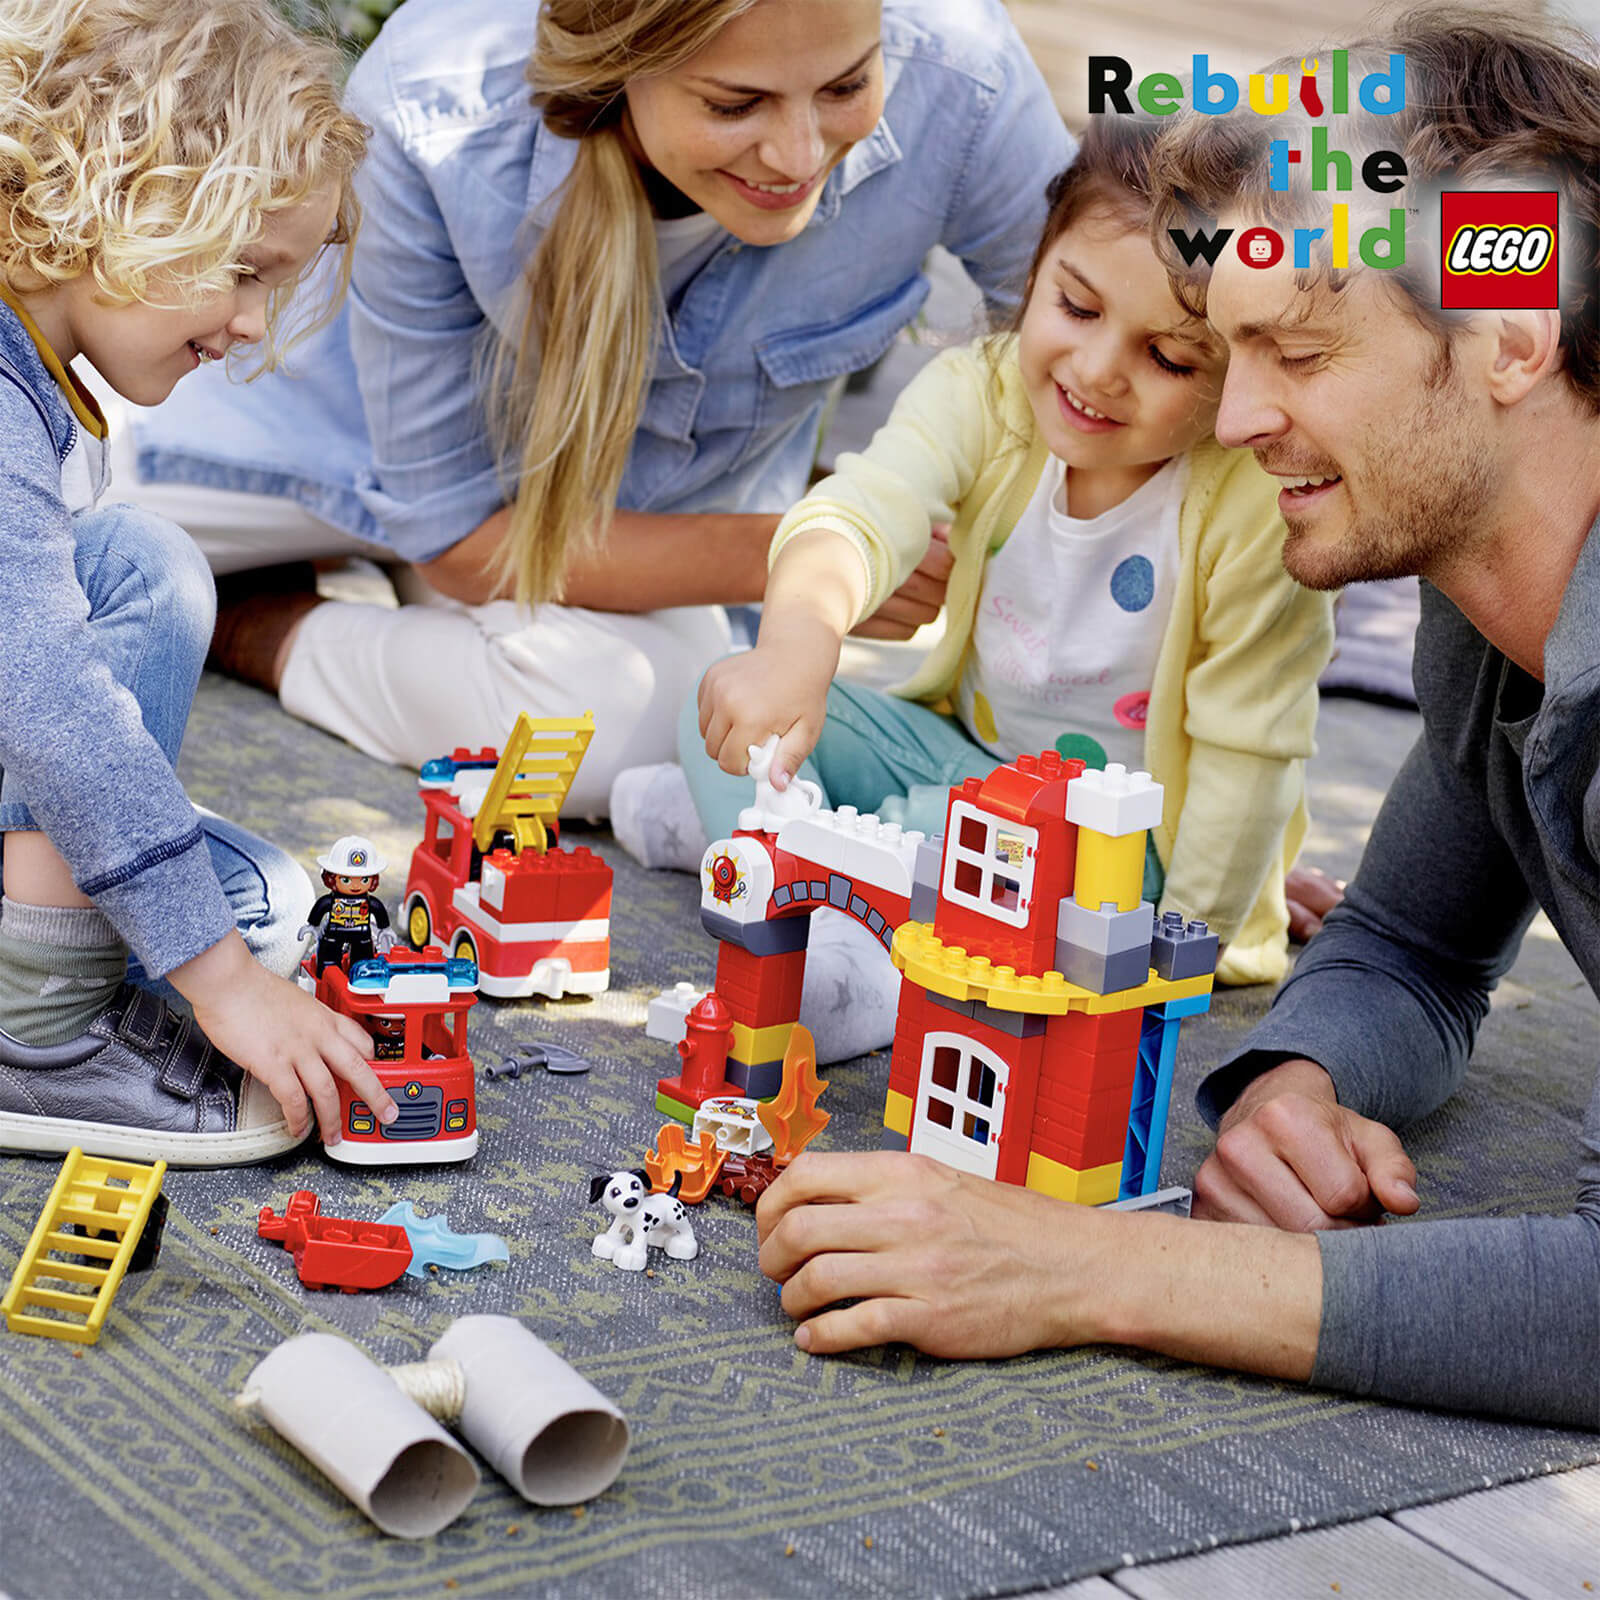 LEGO DUPLO Town: Fire Station Building Bricks Set (10903)